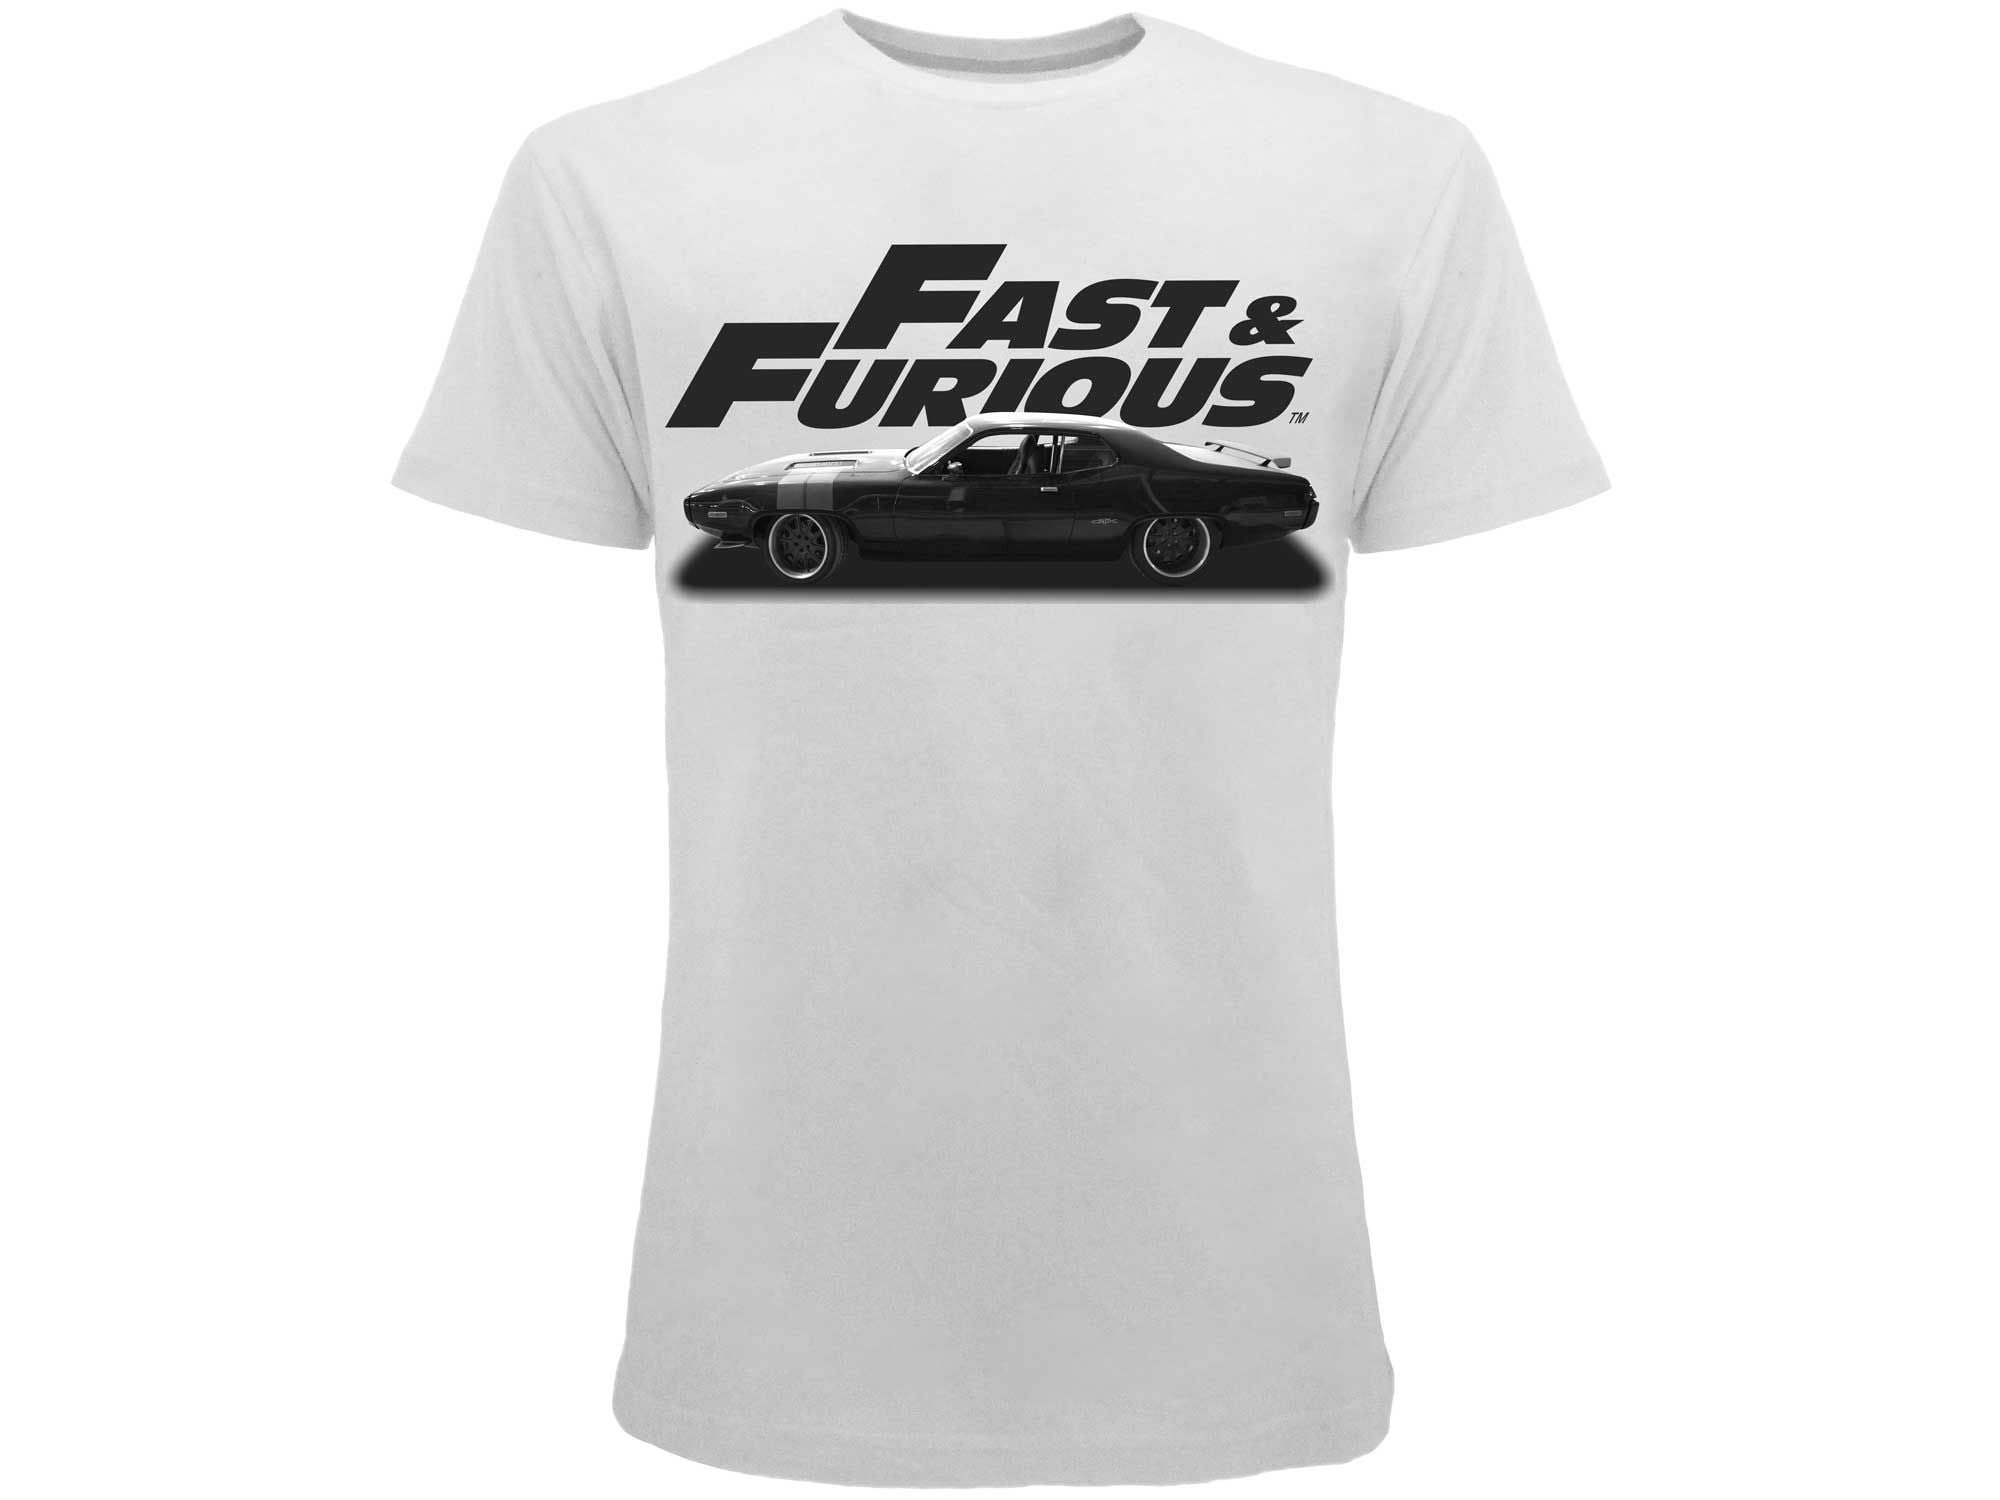 T-Shirt Fast & Furious - Bianca XL - Disponibile in 2/3 giorni lavorativi